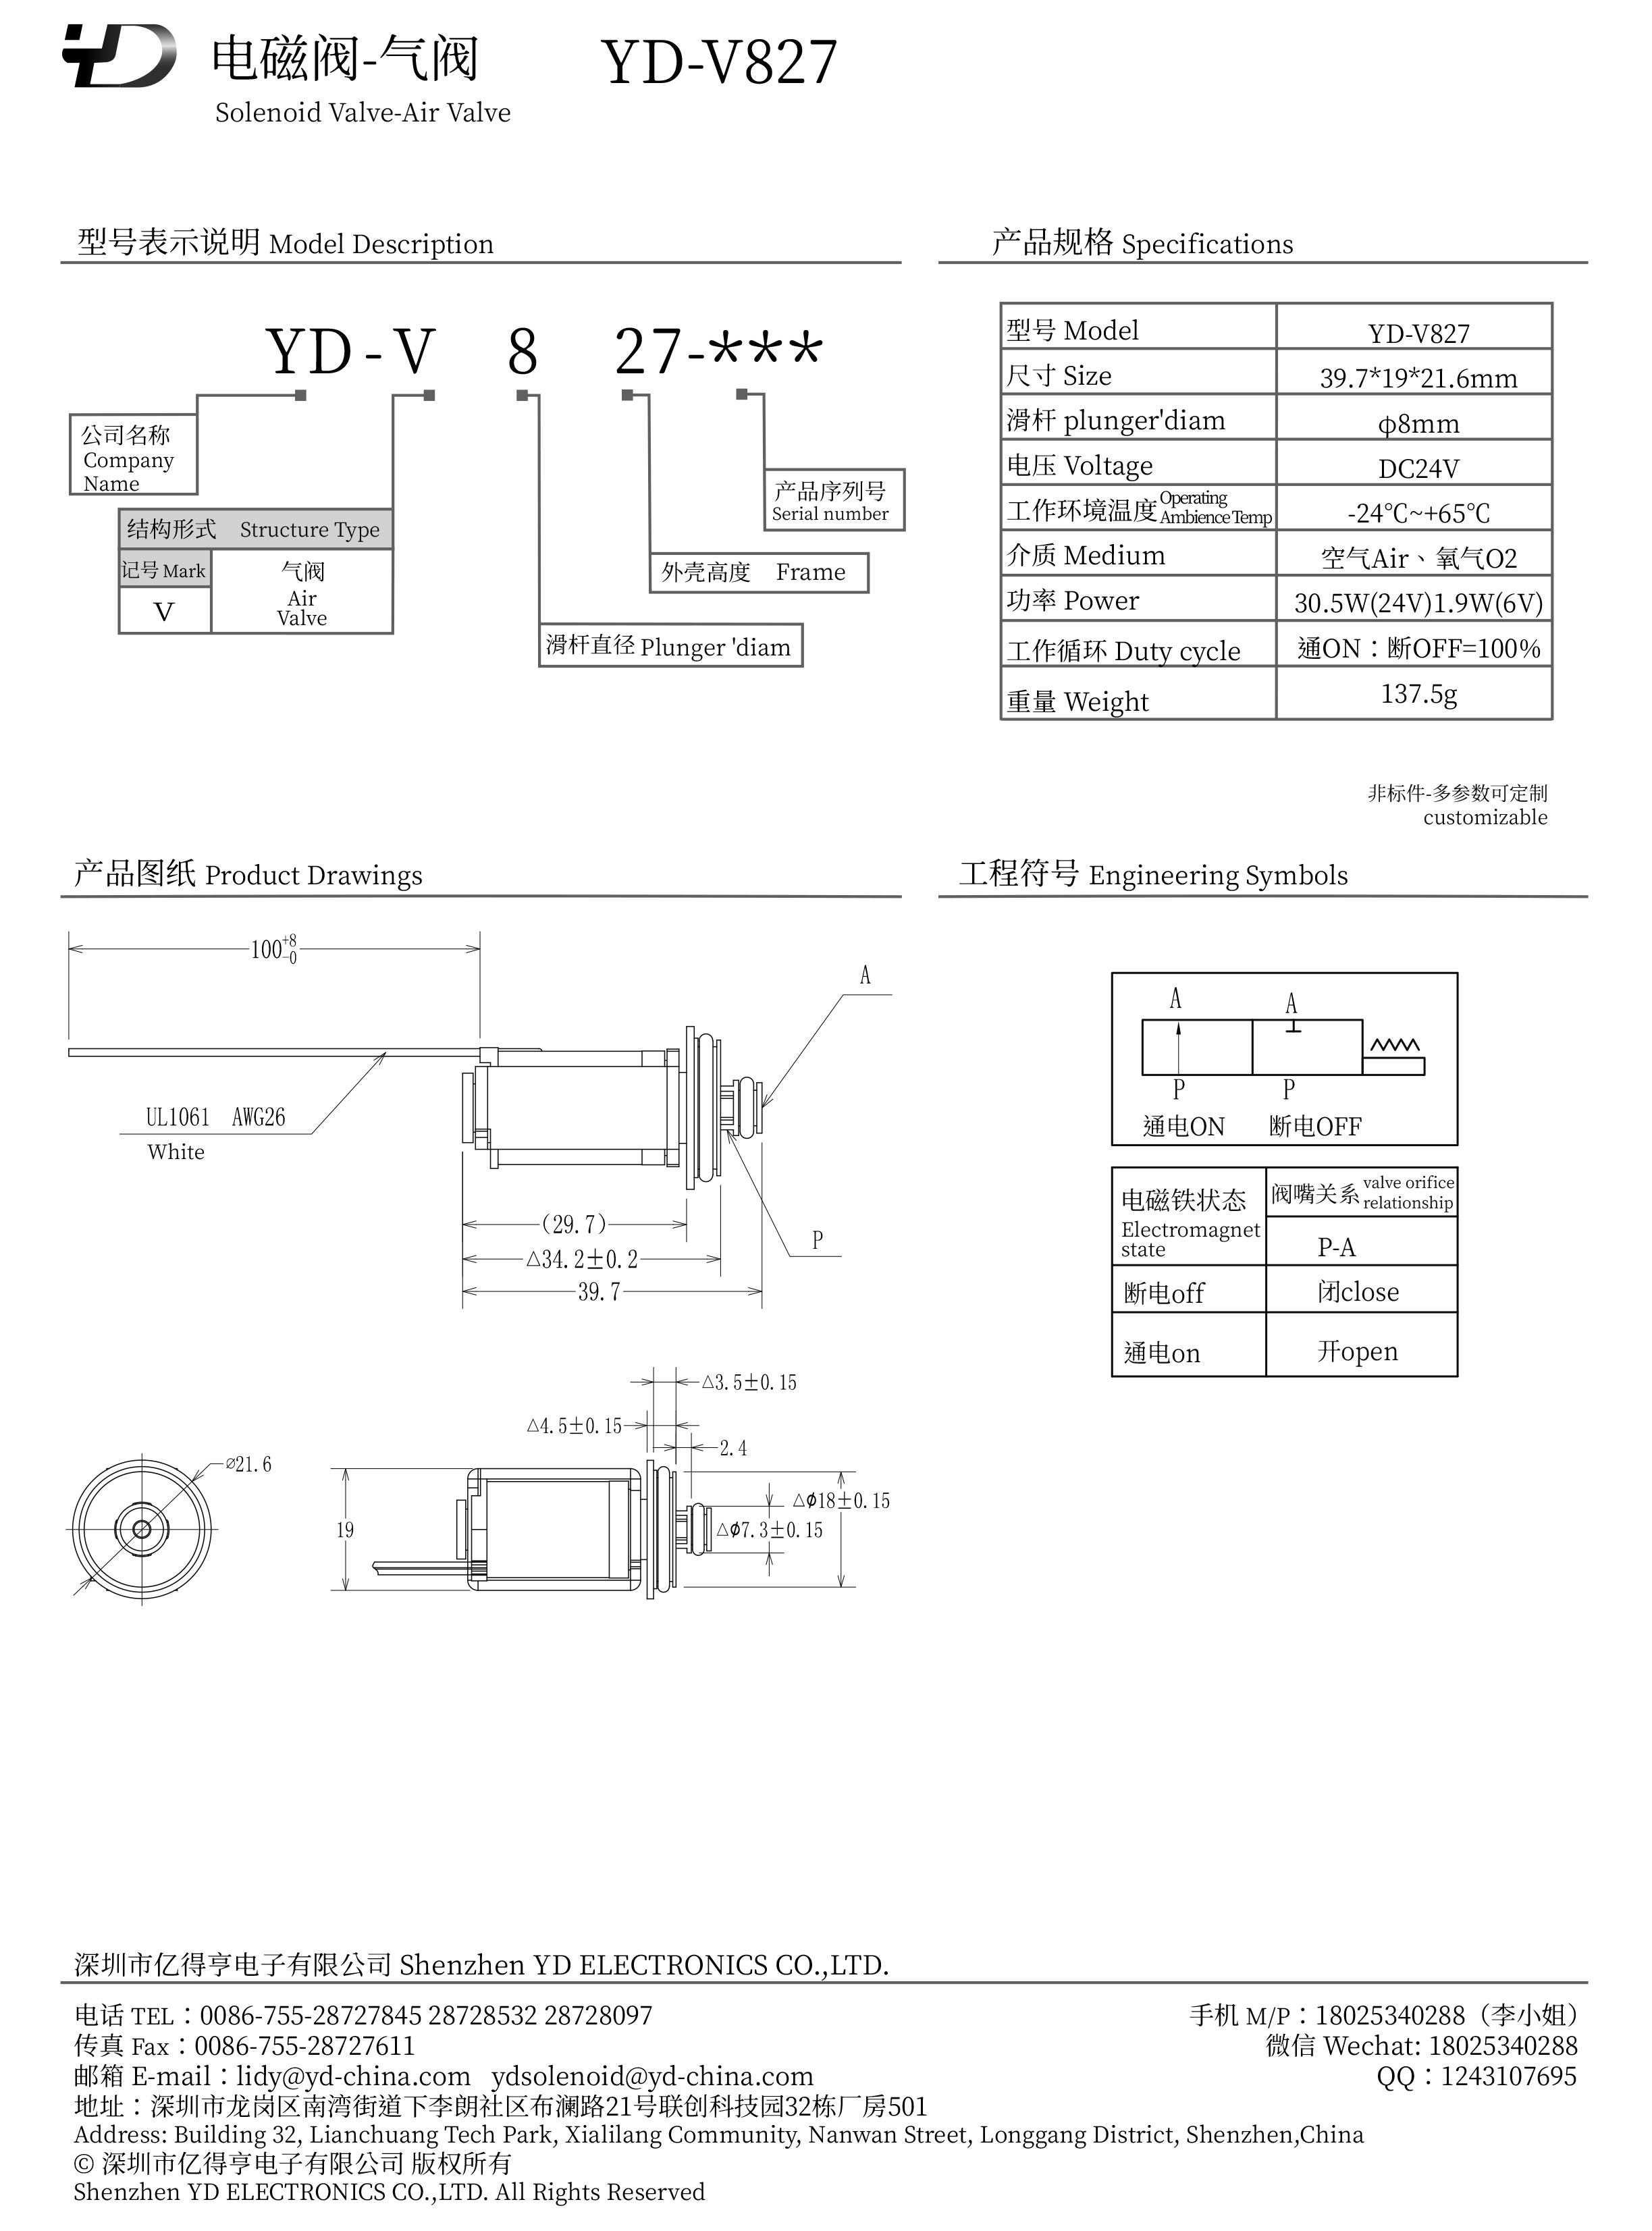 YD-V827-PDF.jpg